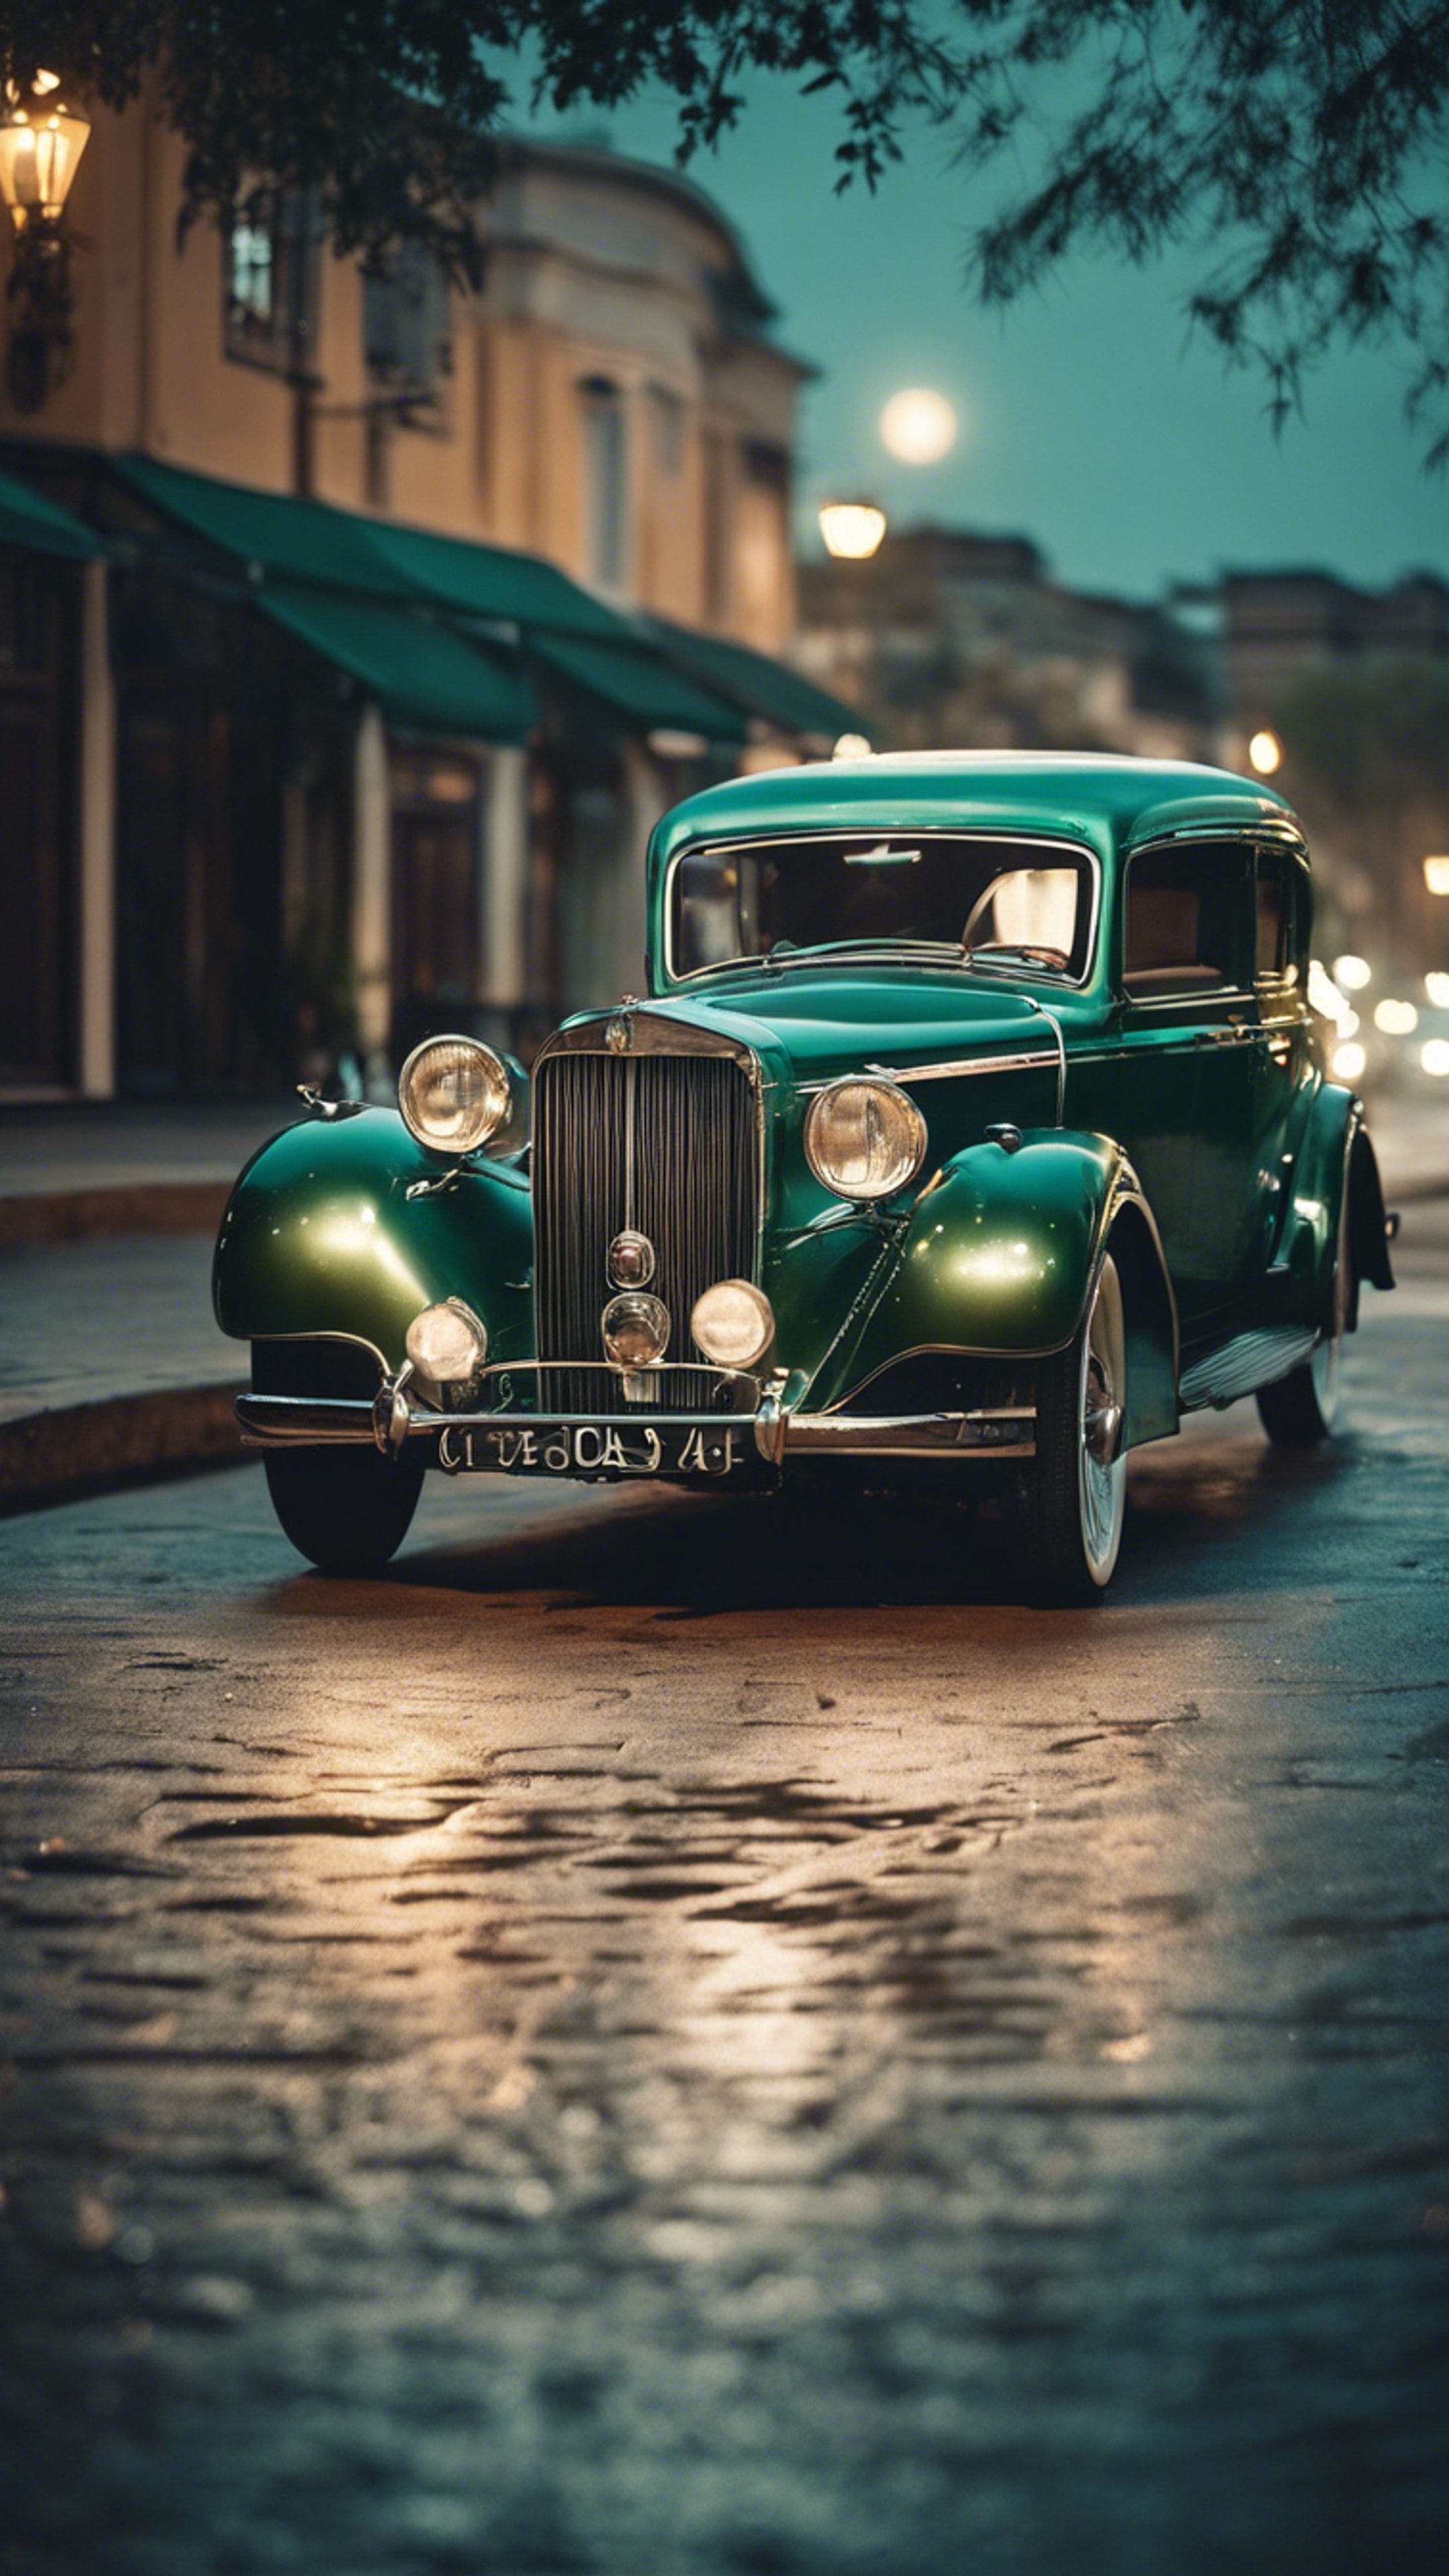 A luxurious antique car painted in cool dark green under the moonlight. ورق الجدران[5cdba2e68b66456f8c5a]